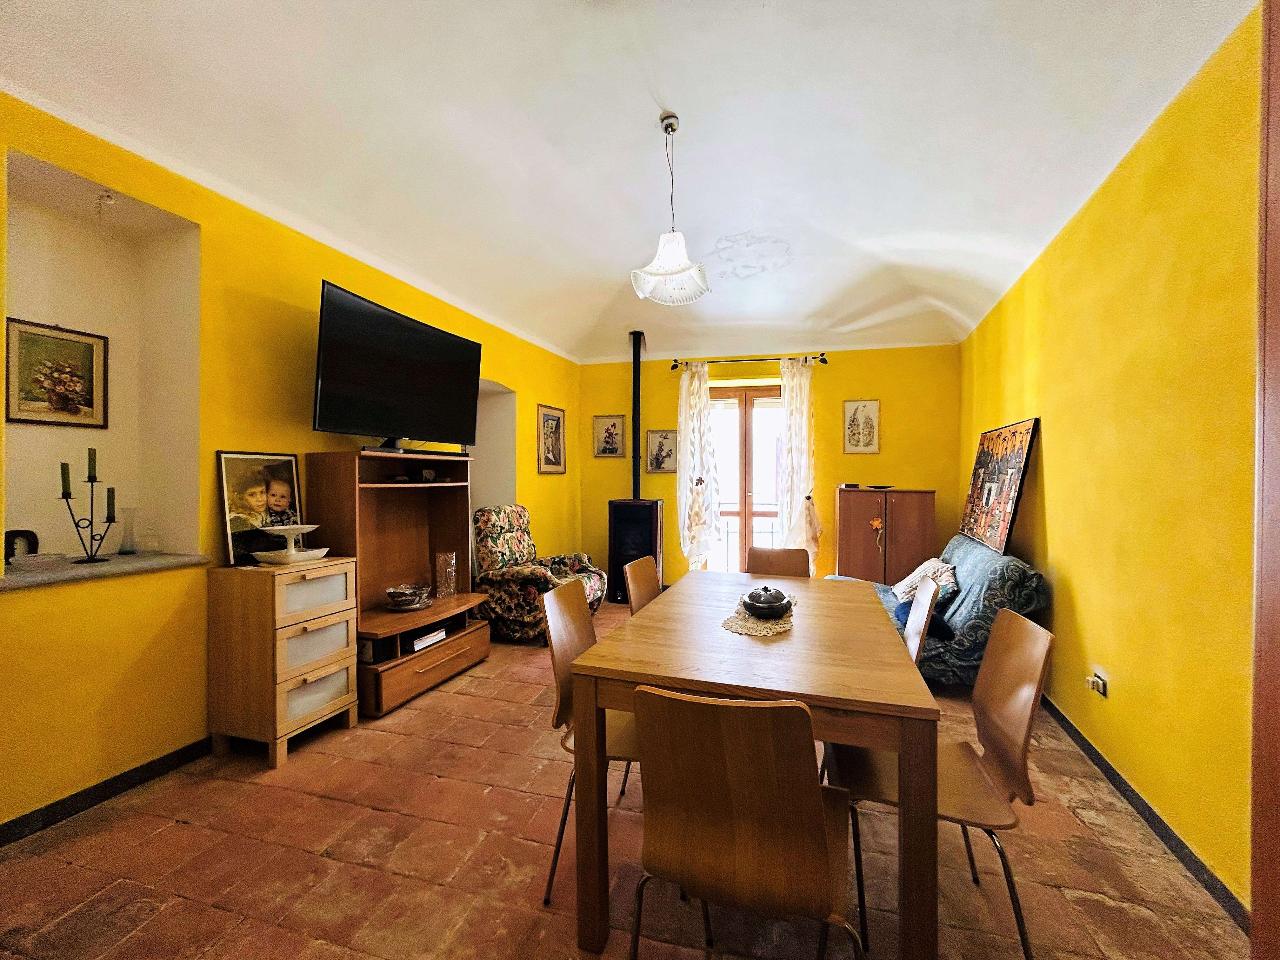 Casa indipendente in vendita a Garessio